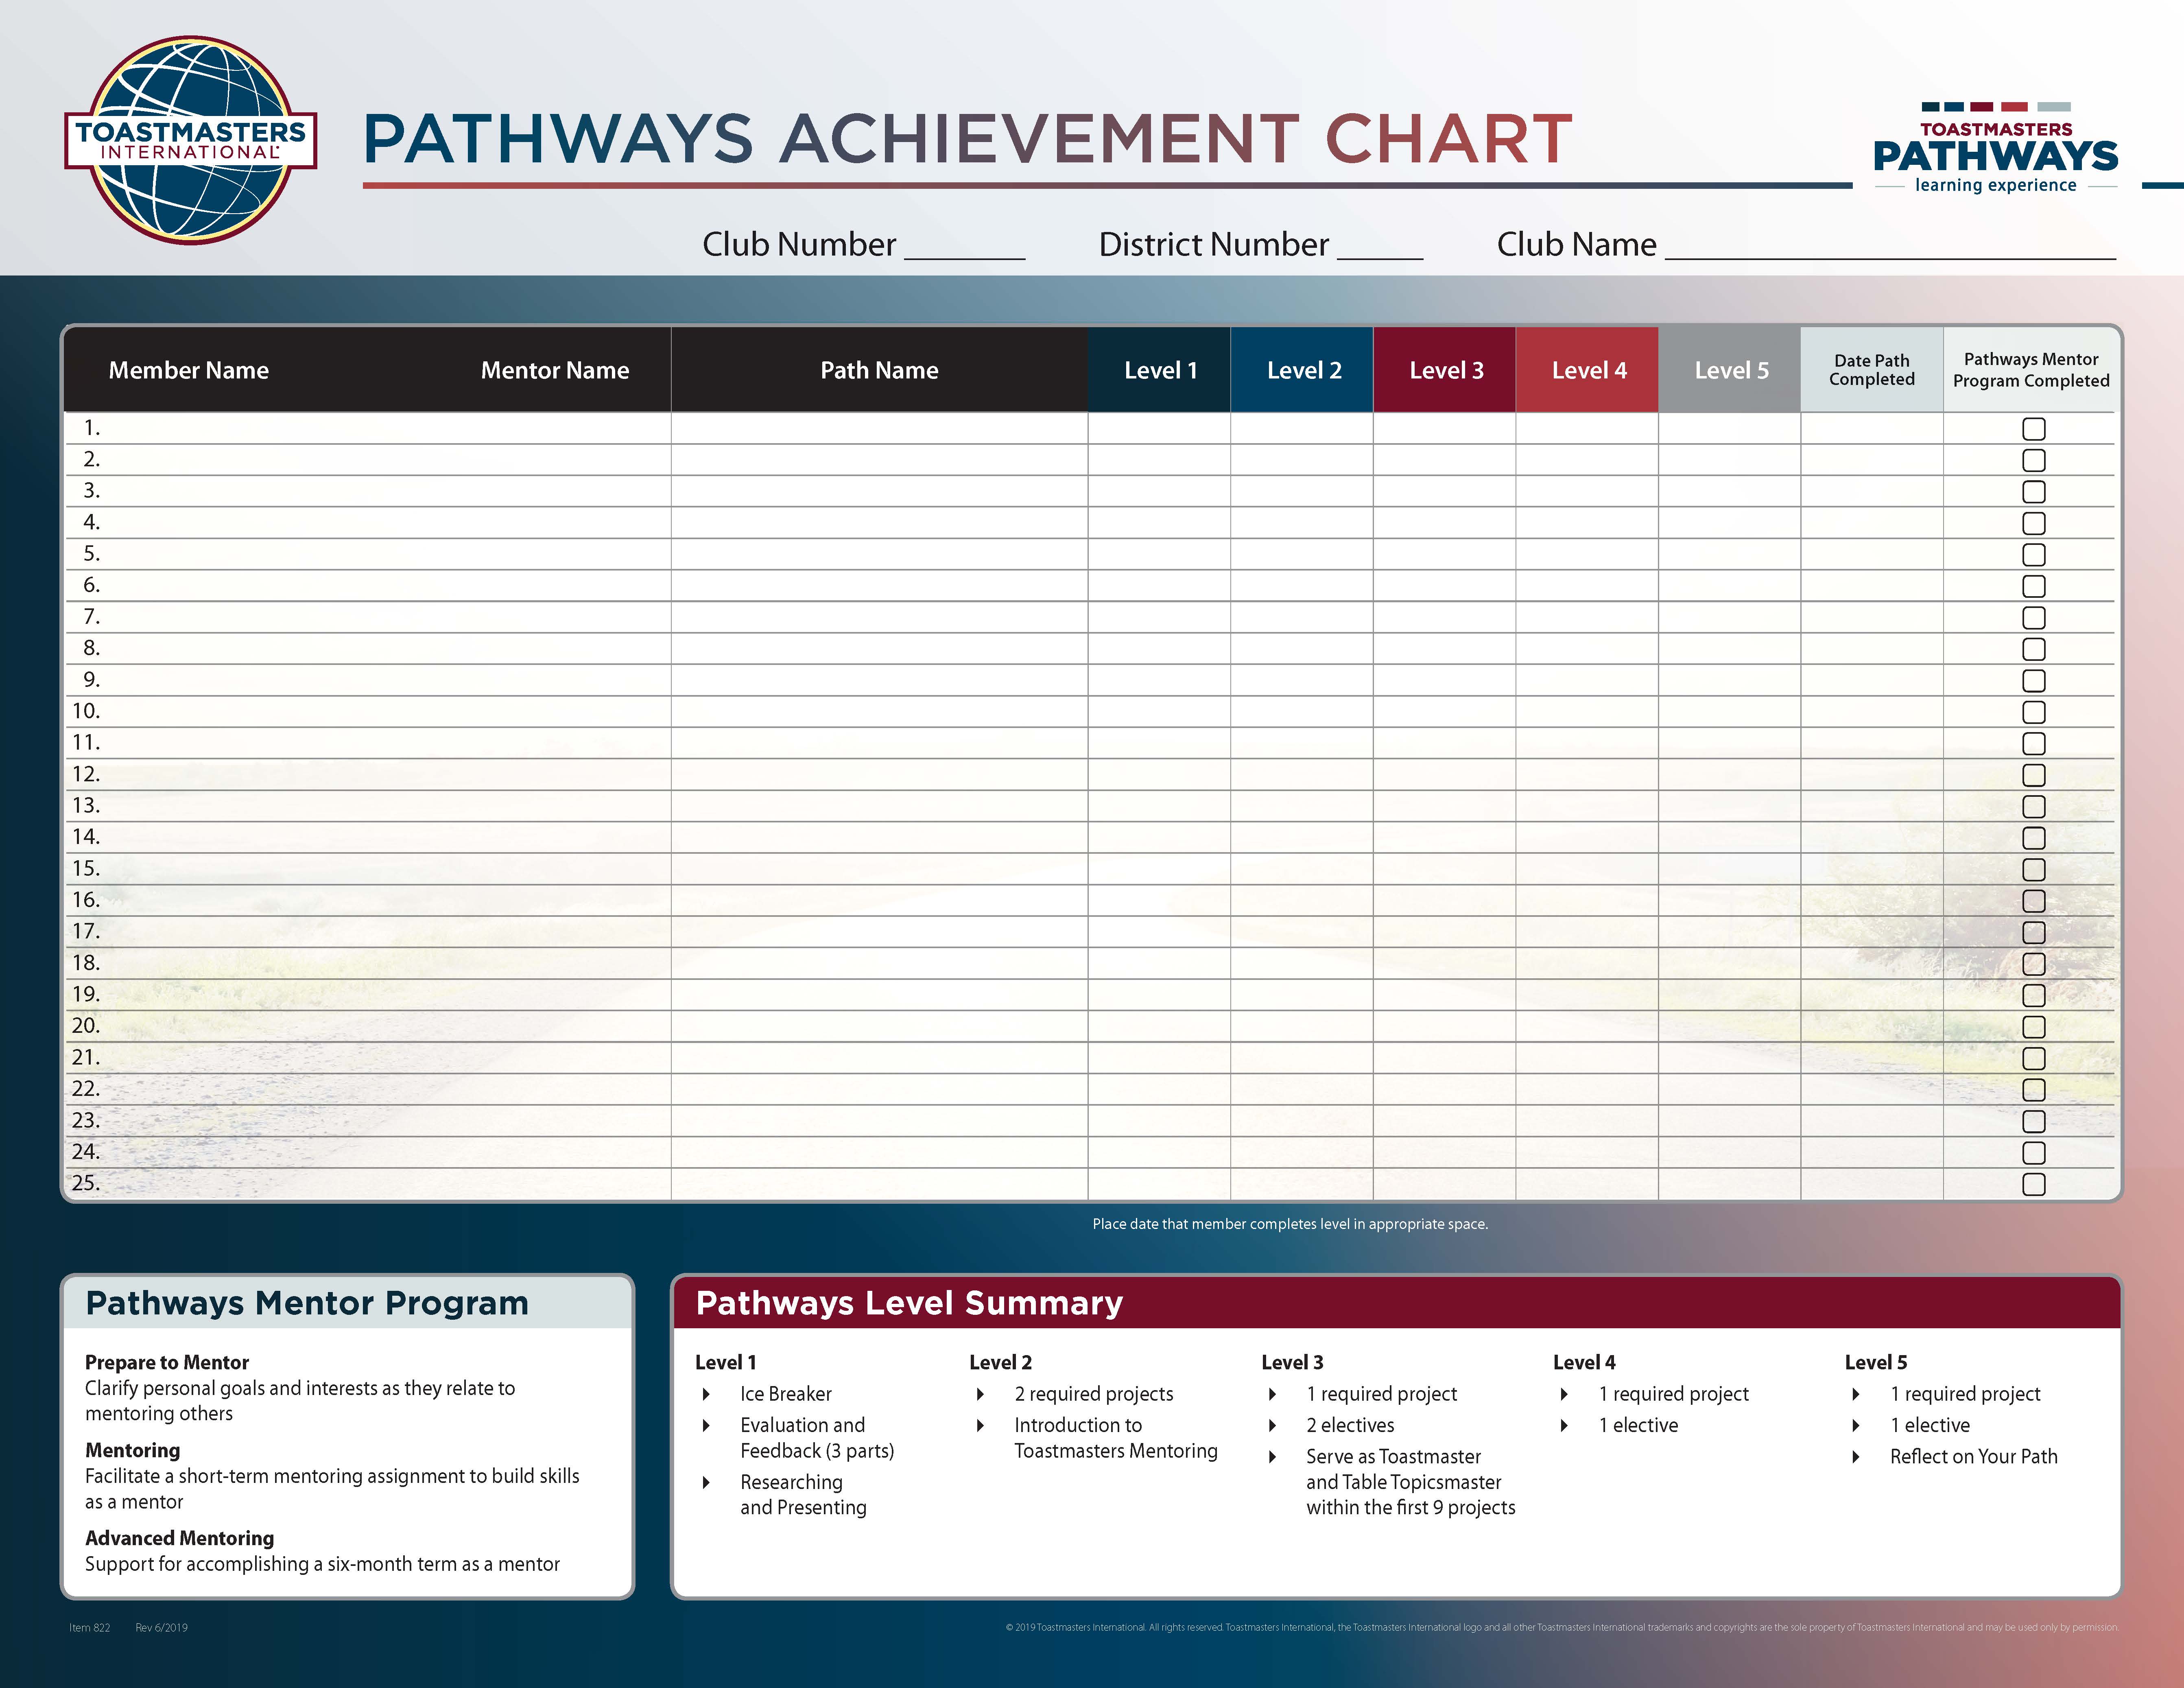 821-pathways-achievement-chart-full-color